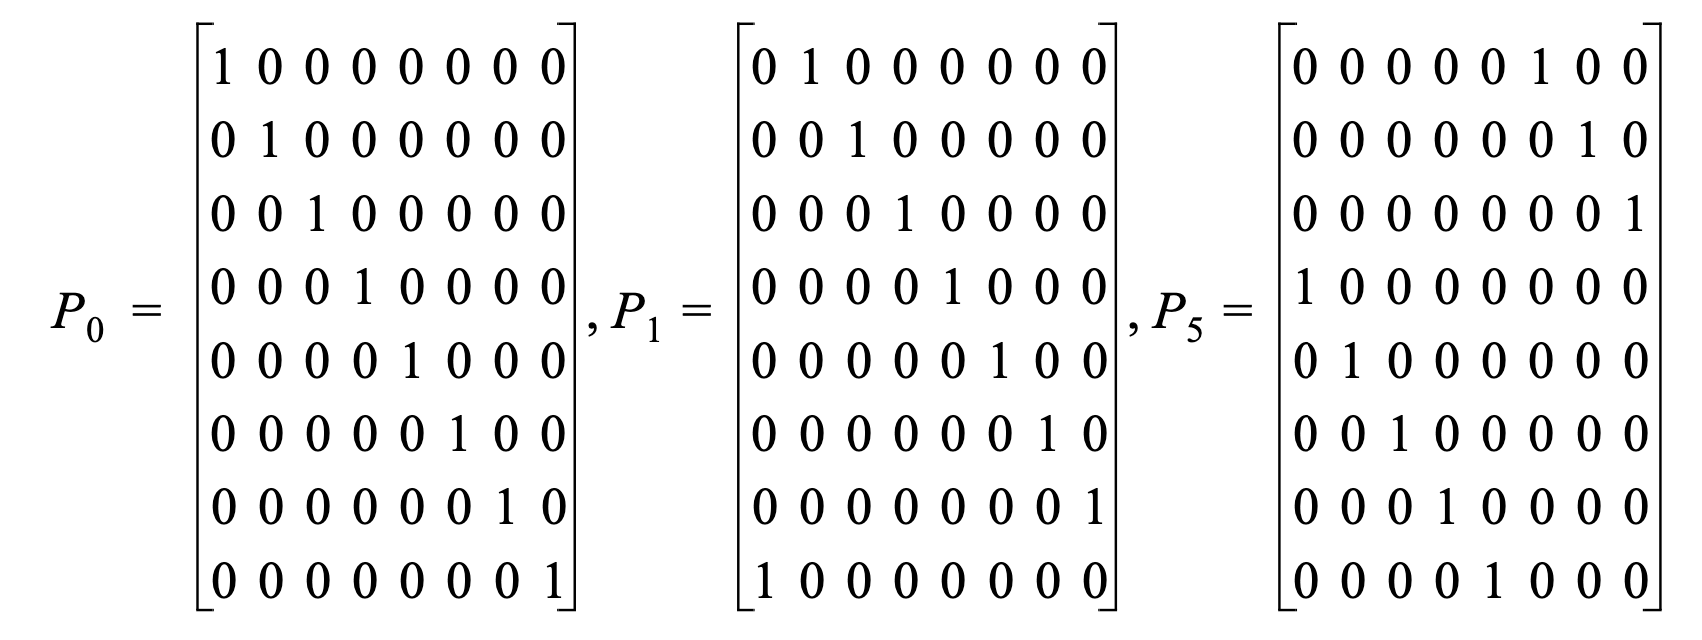 cyclic_permutation_matrix_example.png